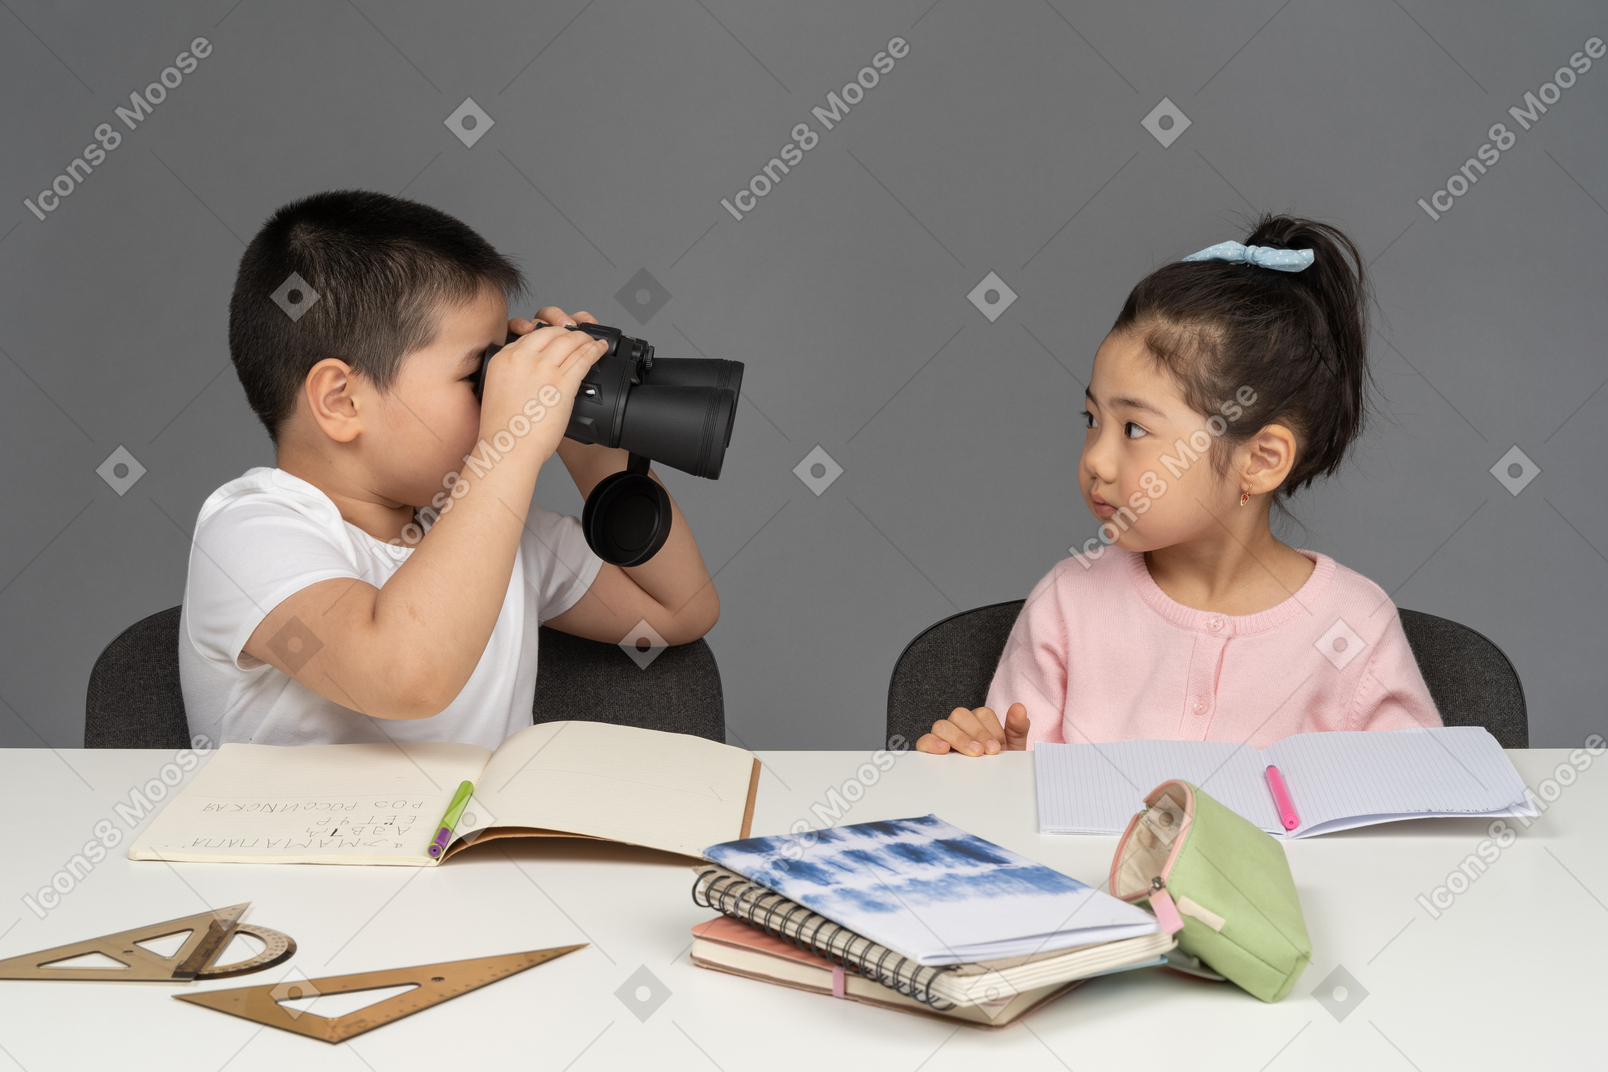 Boy looking at his sister through binoculars